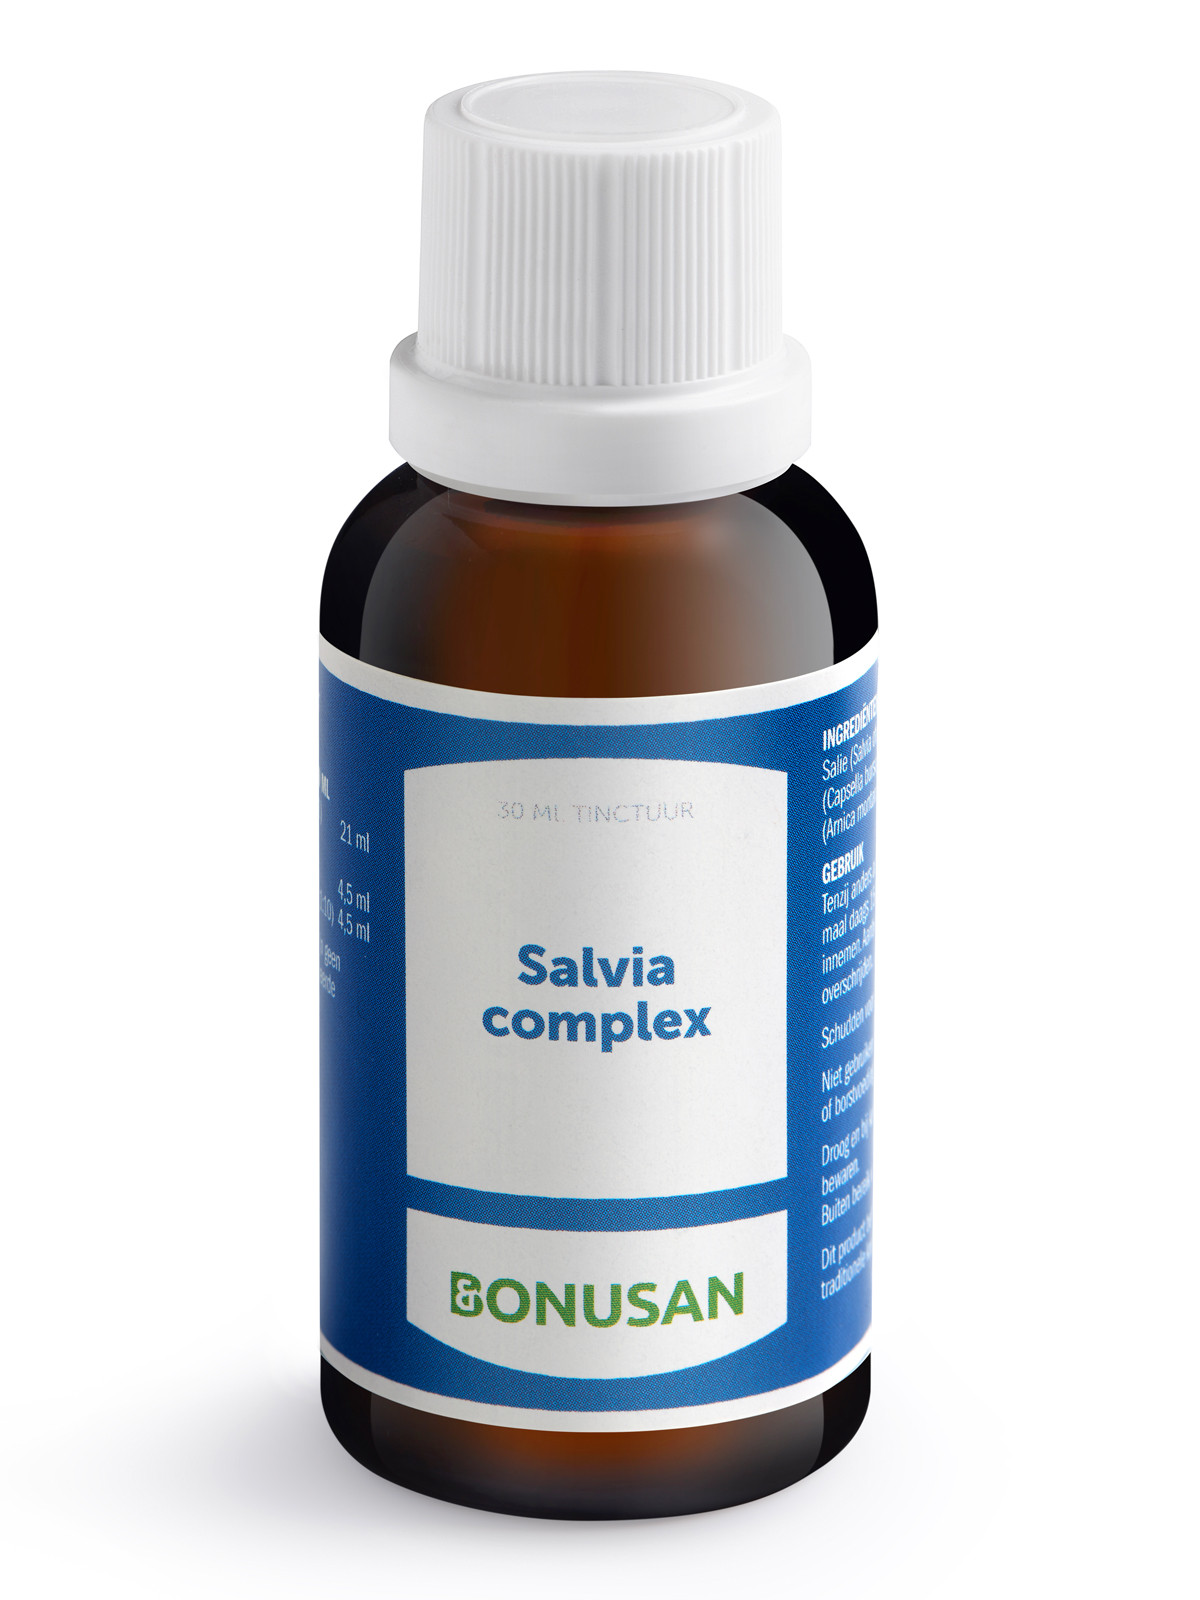 Bonusan - Salvia complex